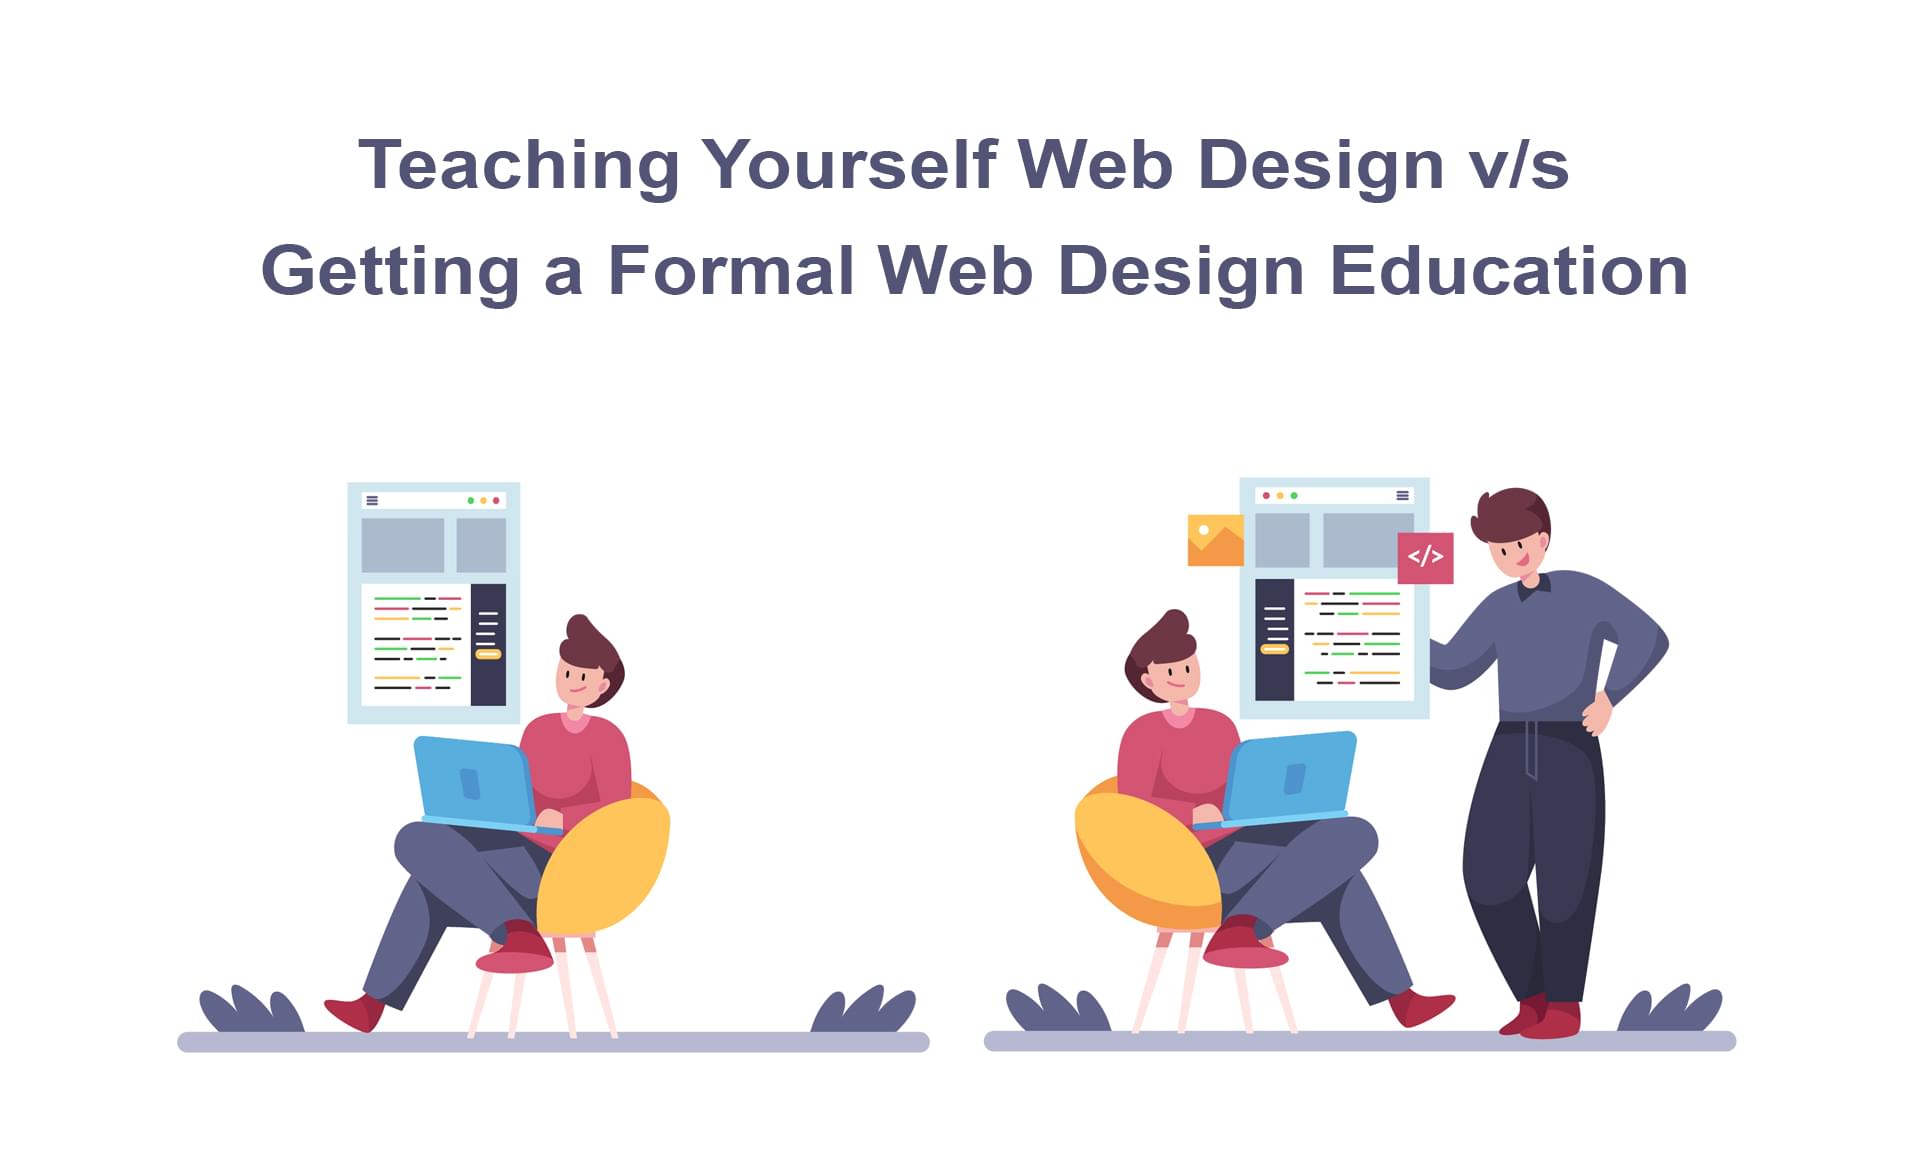 Teaching yourself web design vs getting a formal web design education